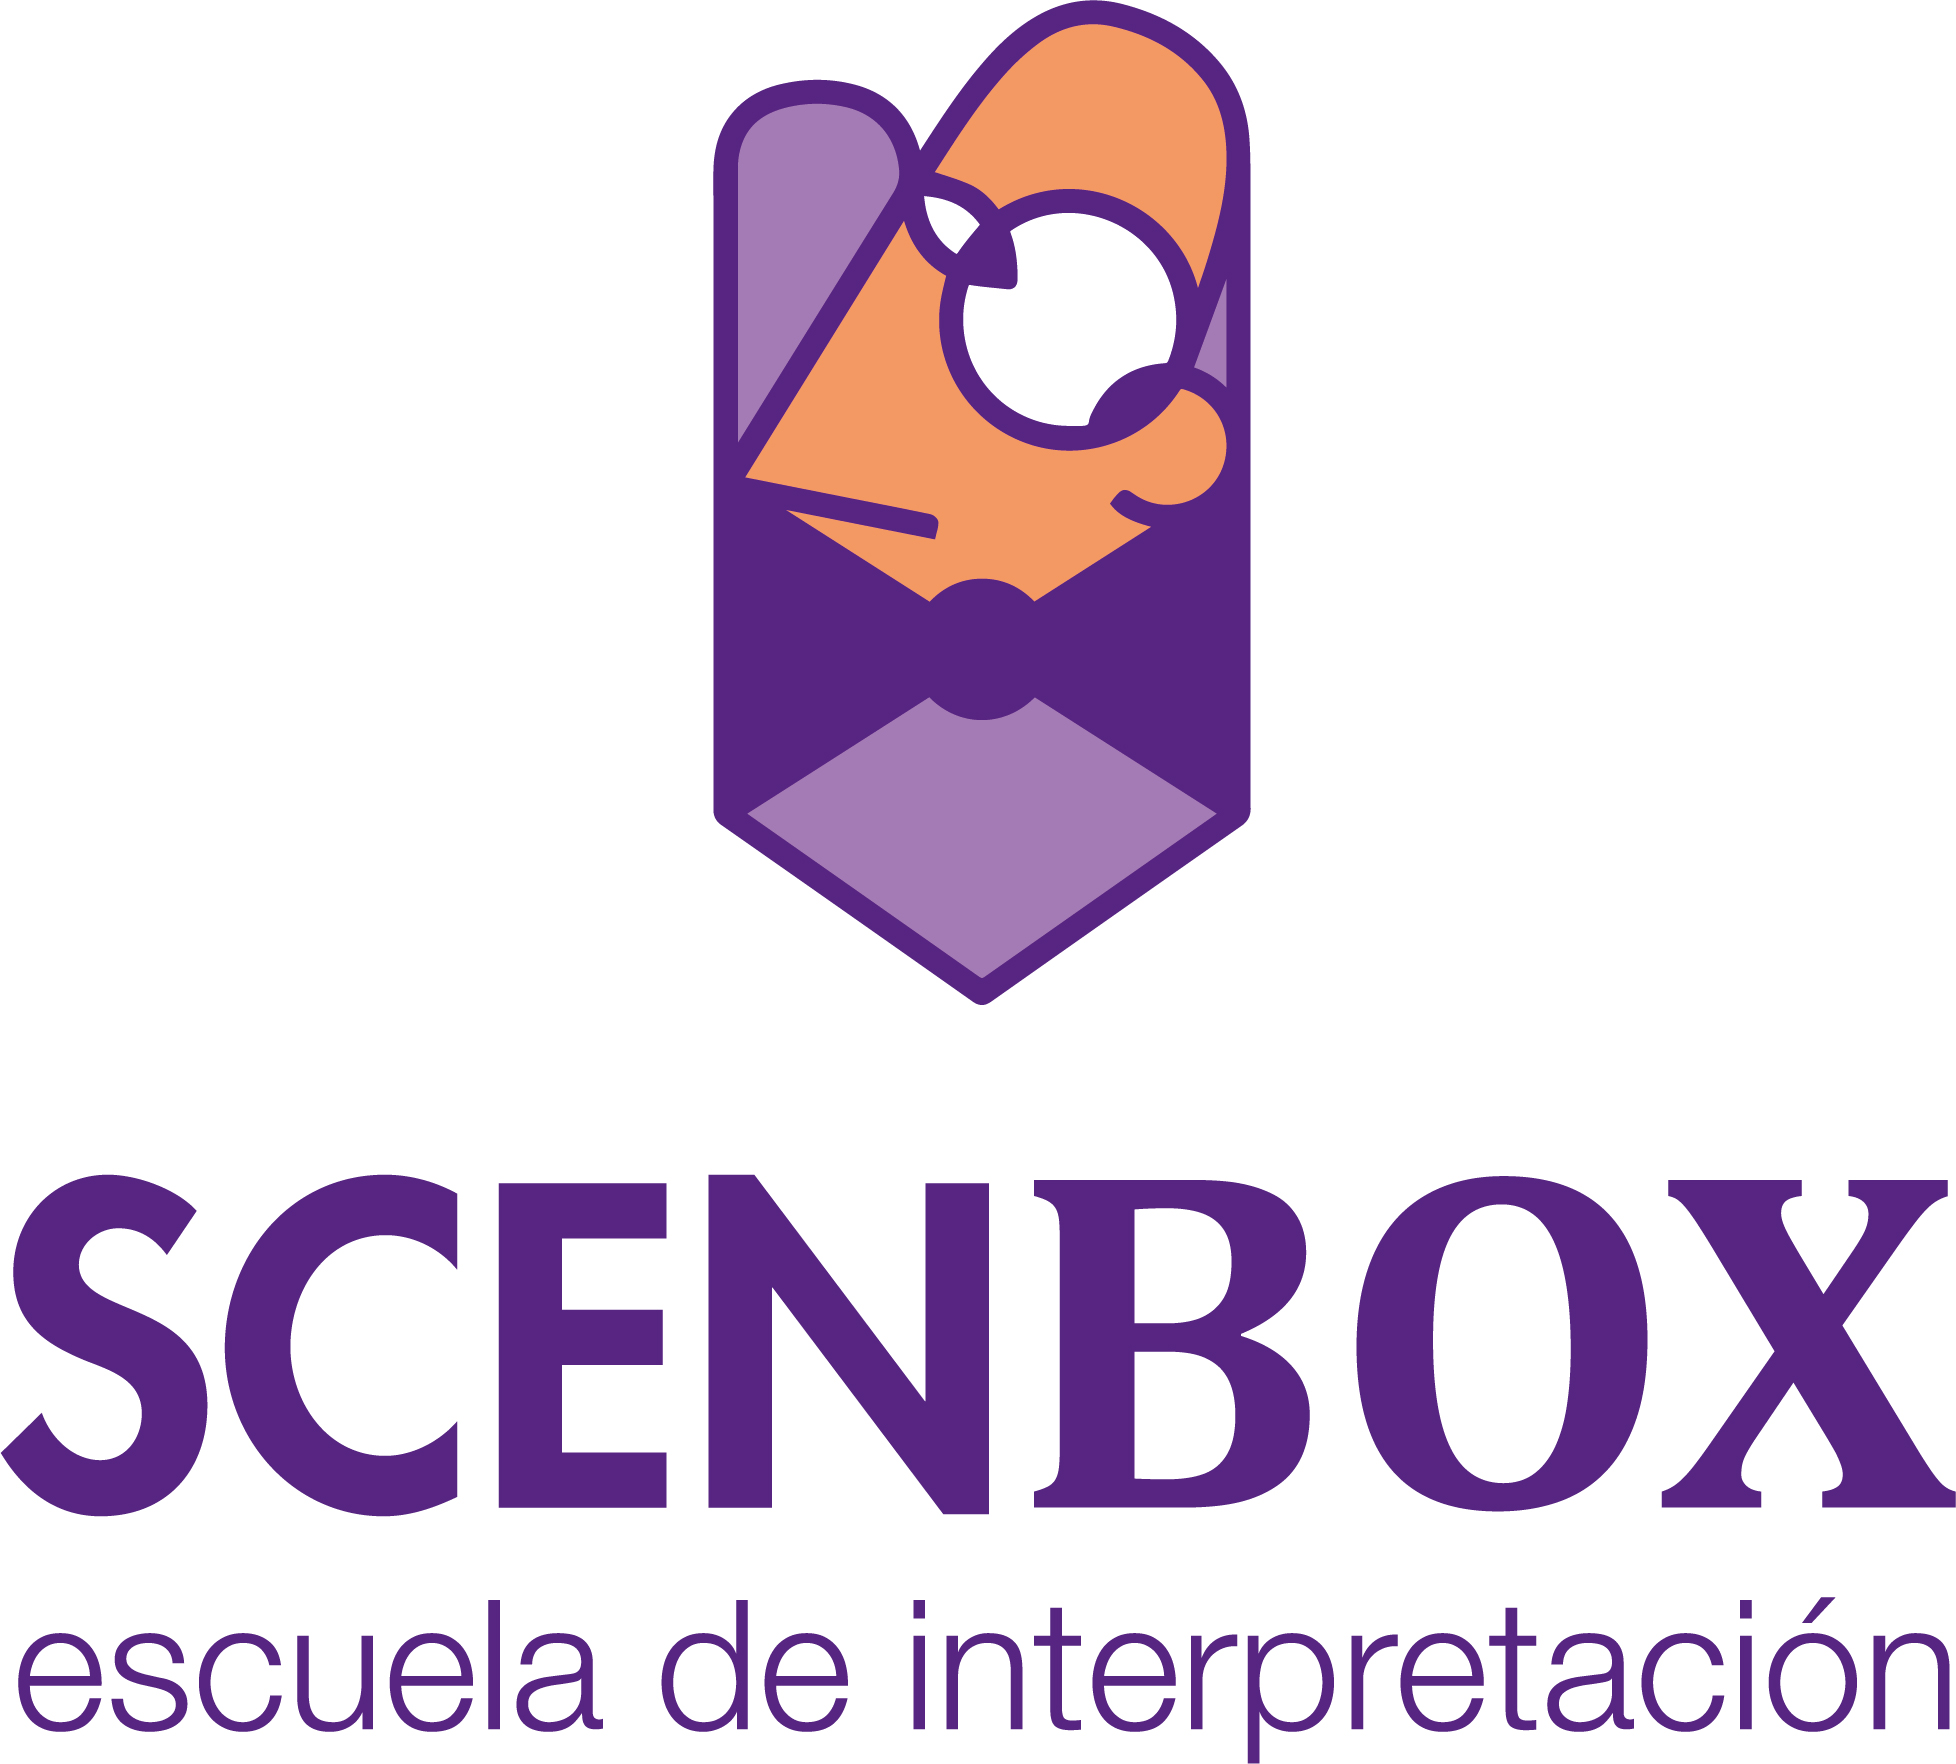 Identidad Corporativa SCENBOX by Alicia Romero Flores - Creative Work